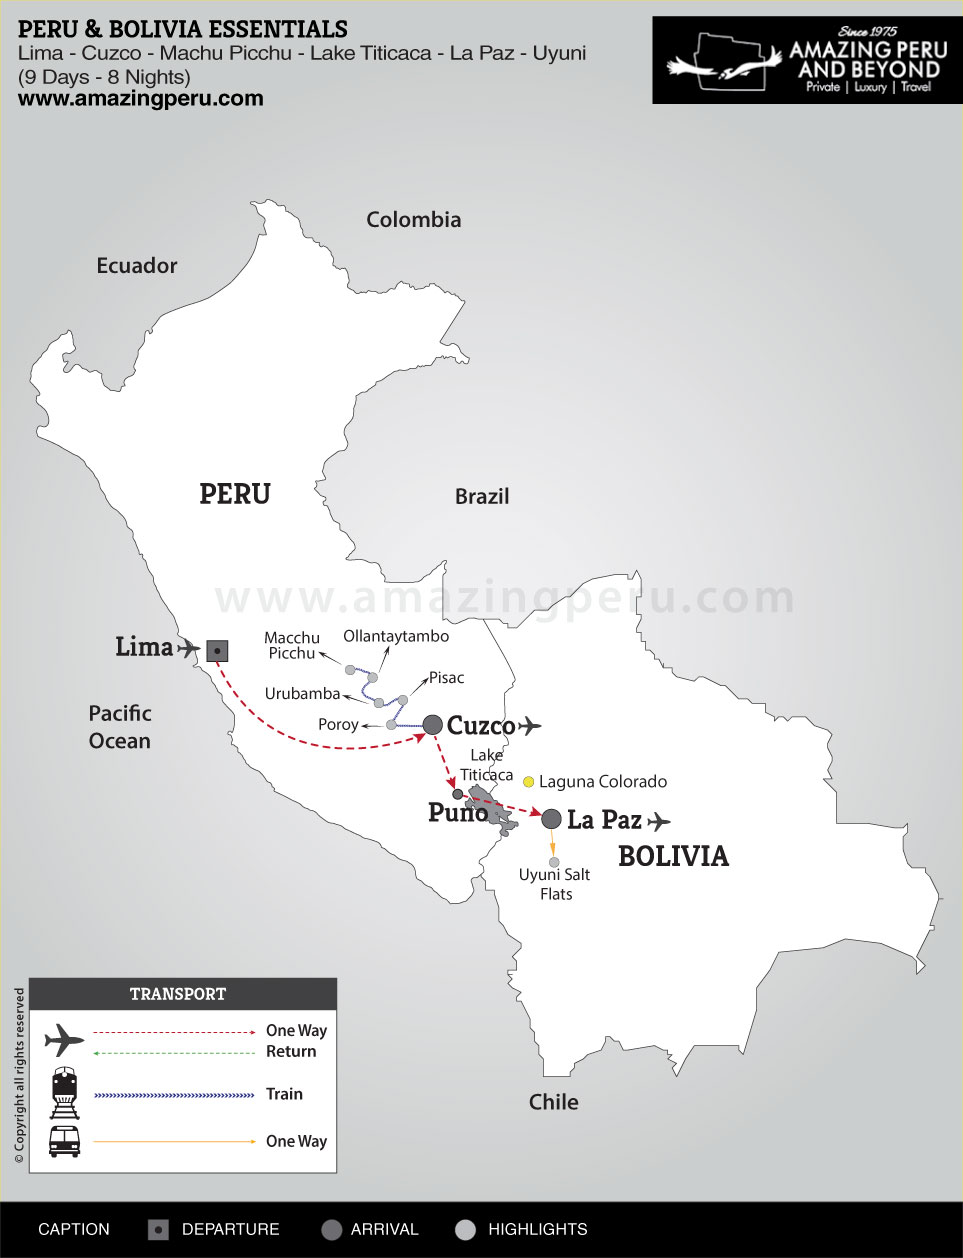 Peru & Bolivia Essentials - 9 days / 8 nights.